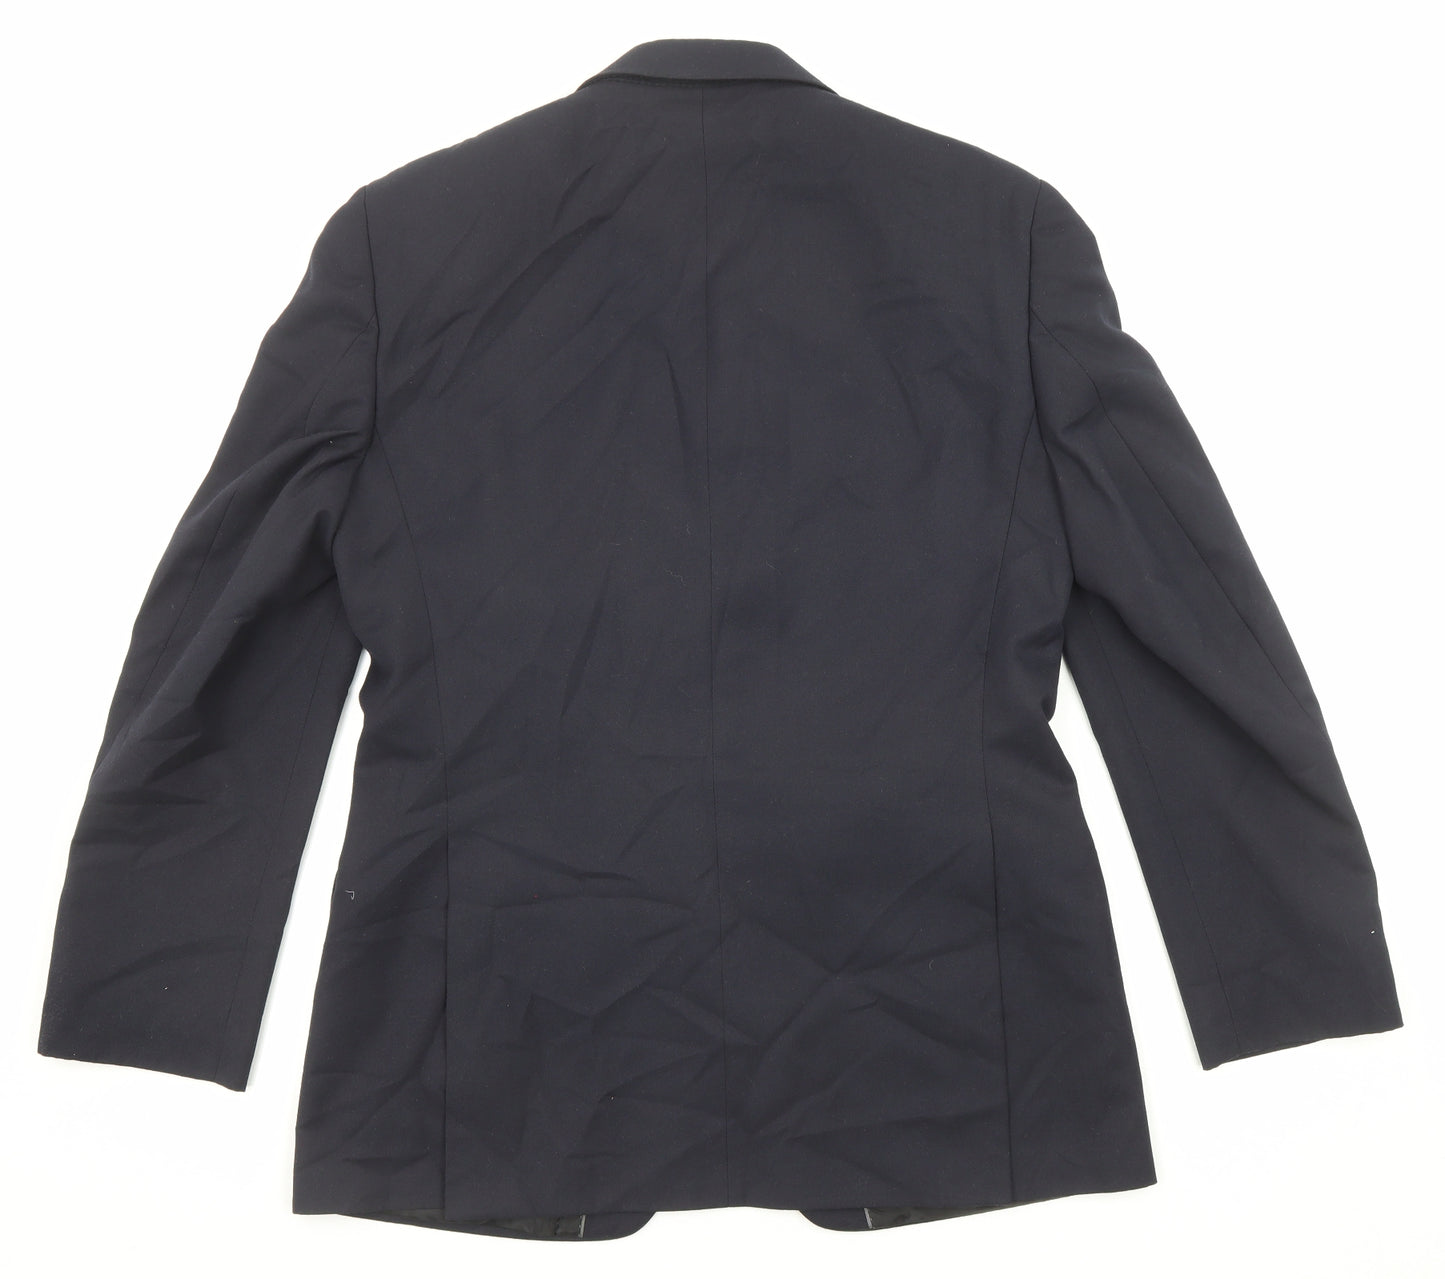 Terry de Havilland Mens Blue Polyester Jacket Suit Jacket Size 38 Regular